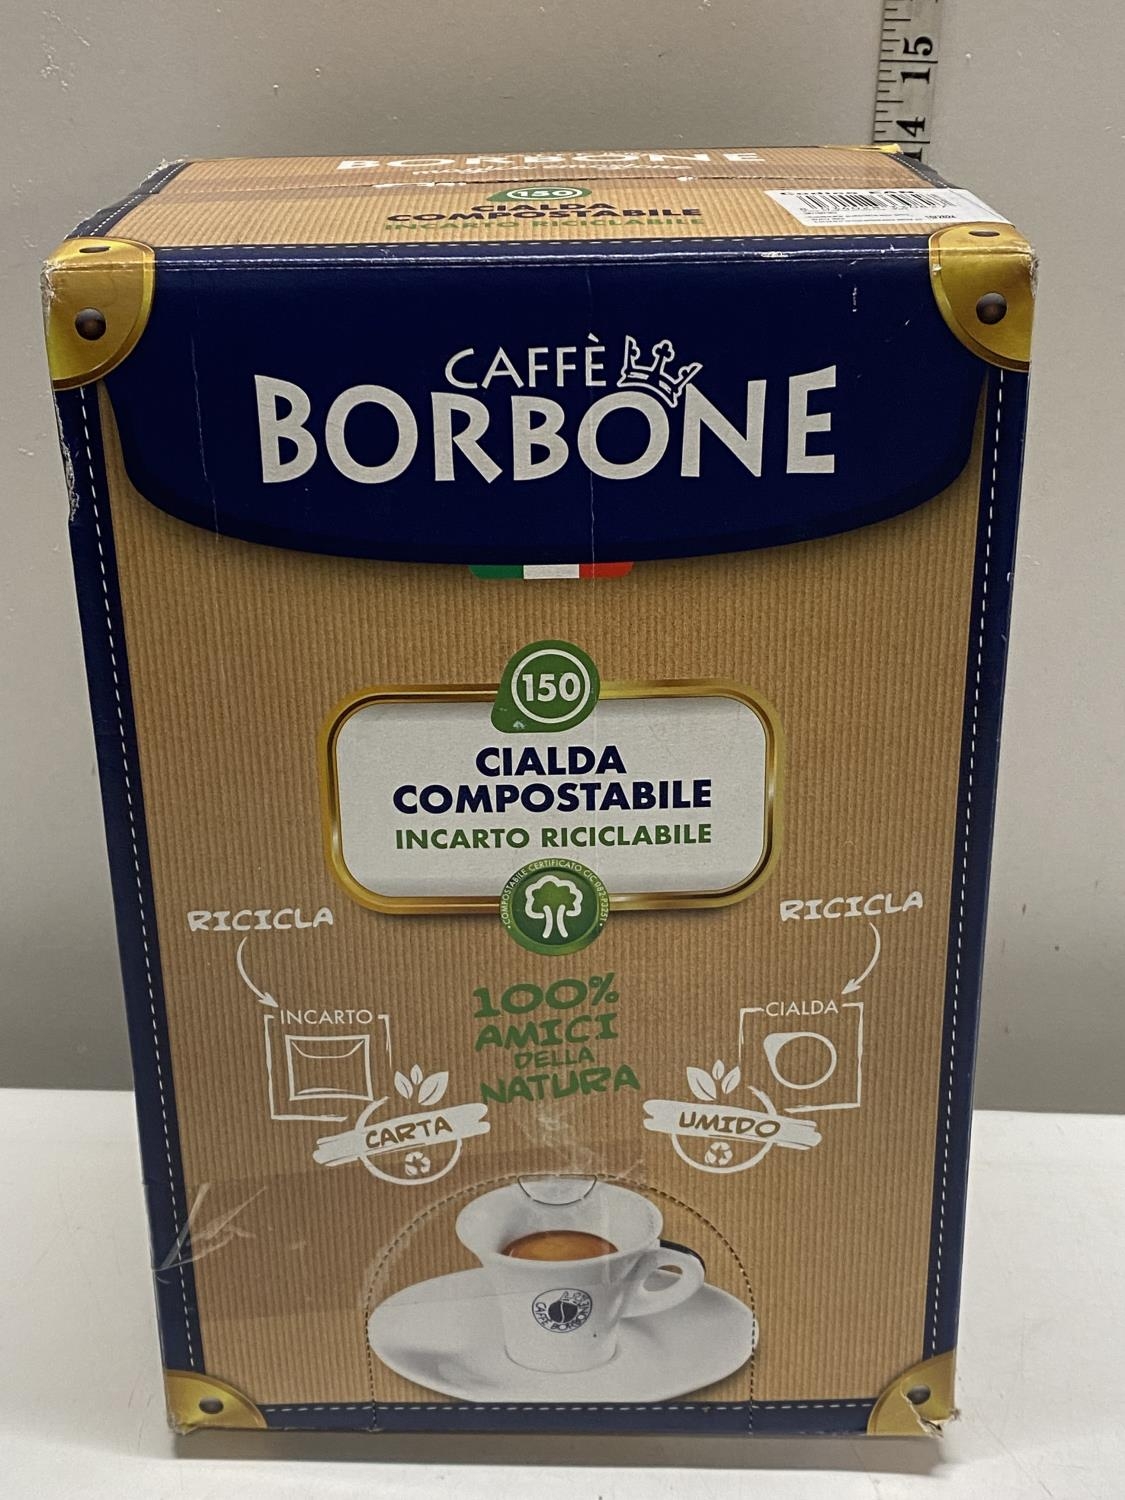 A 150 cafe Borbone Caffe coffee capsules